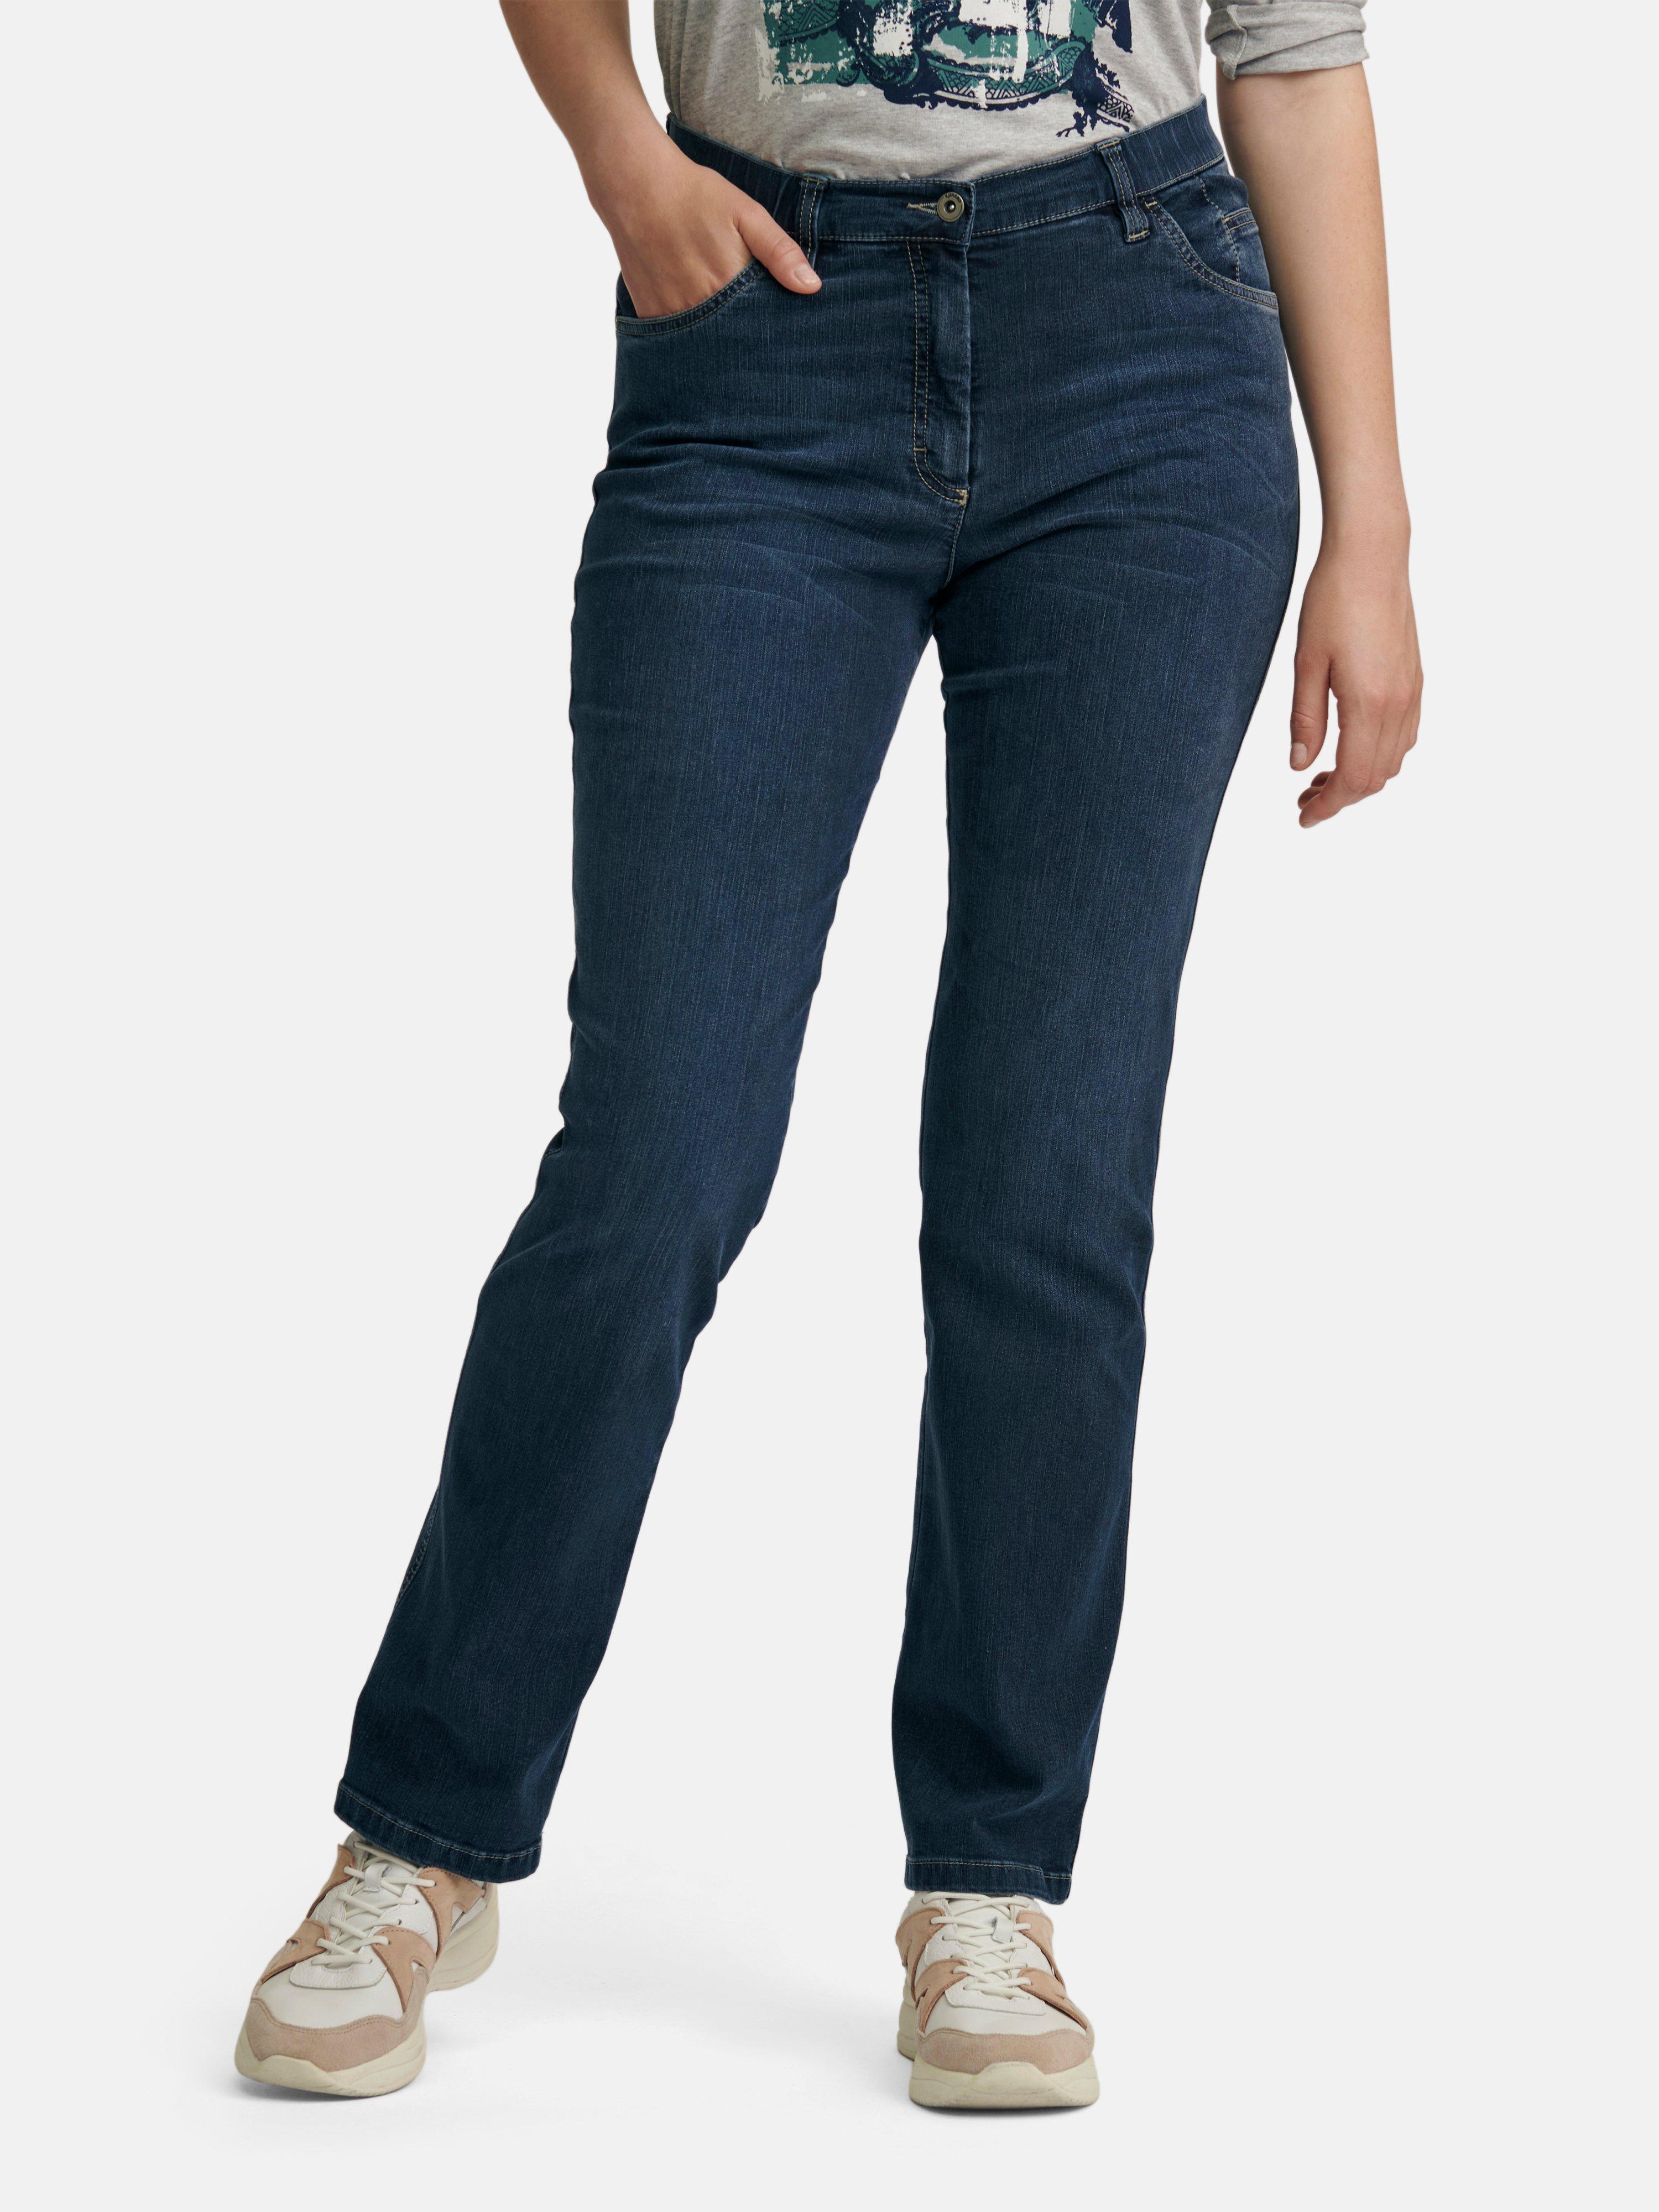 KjBrand - Jeans Modell BettyCS